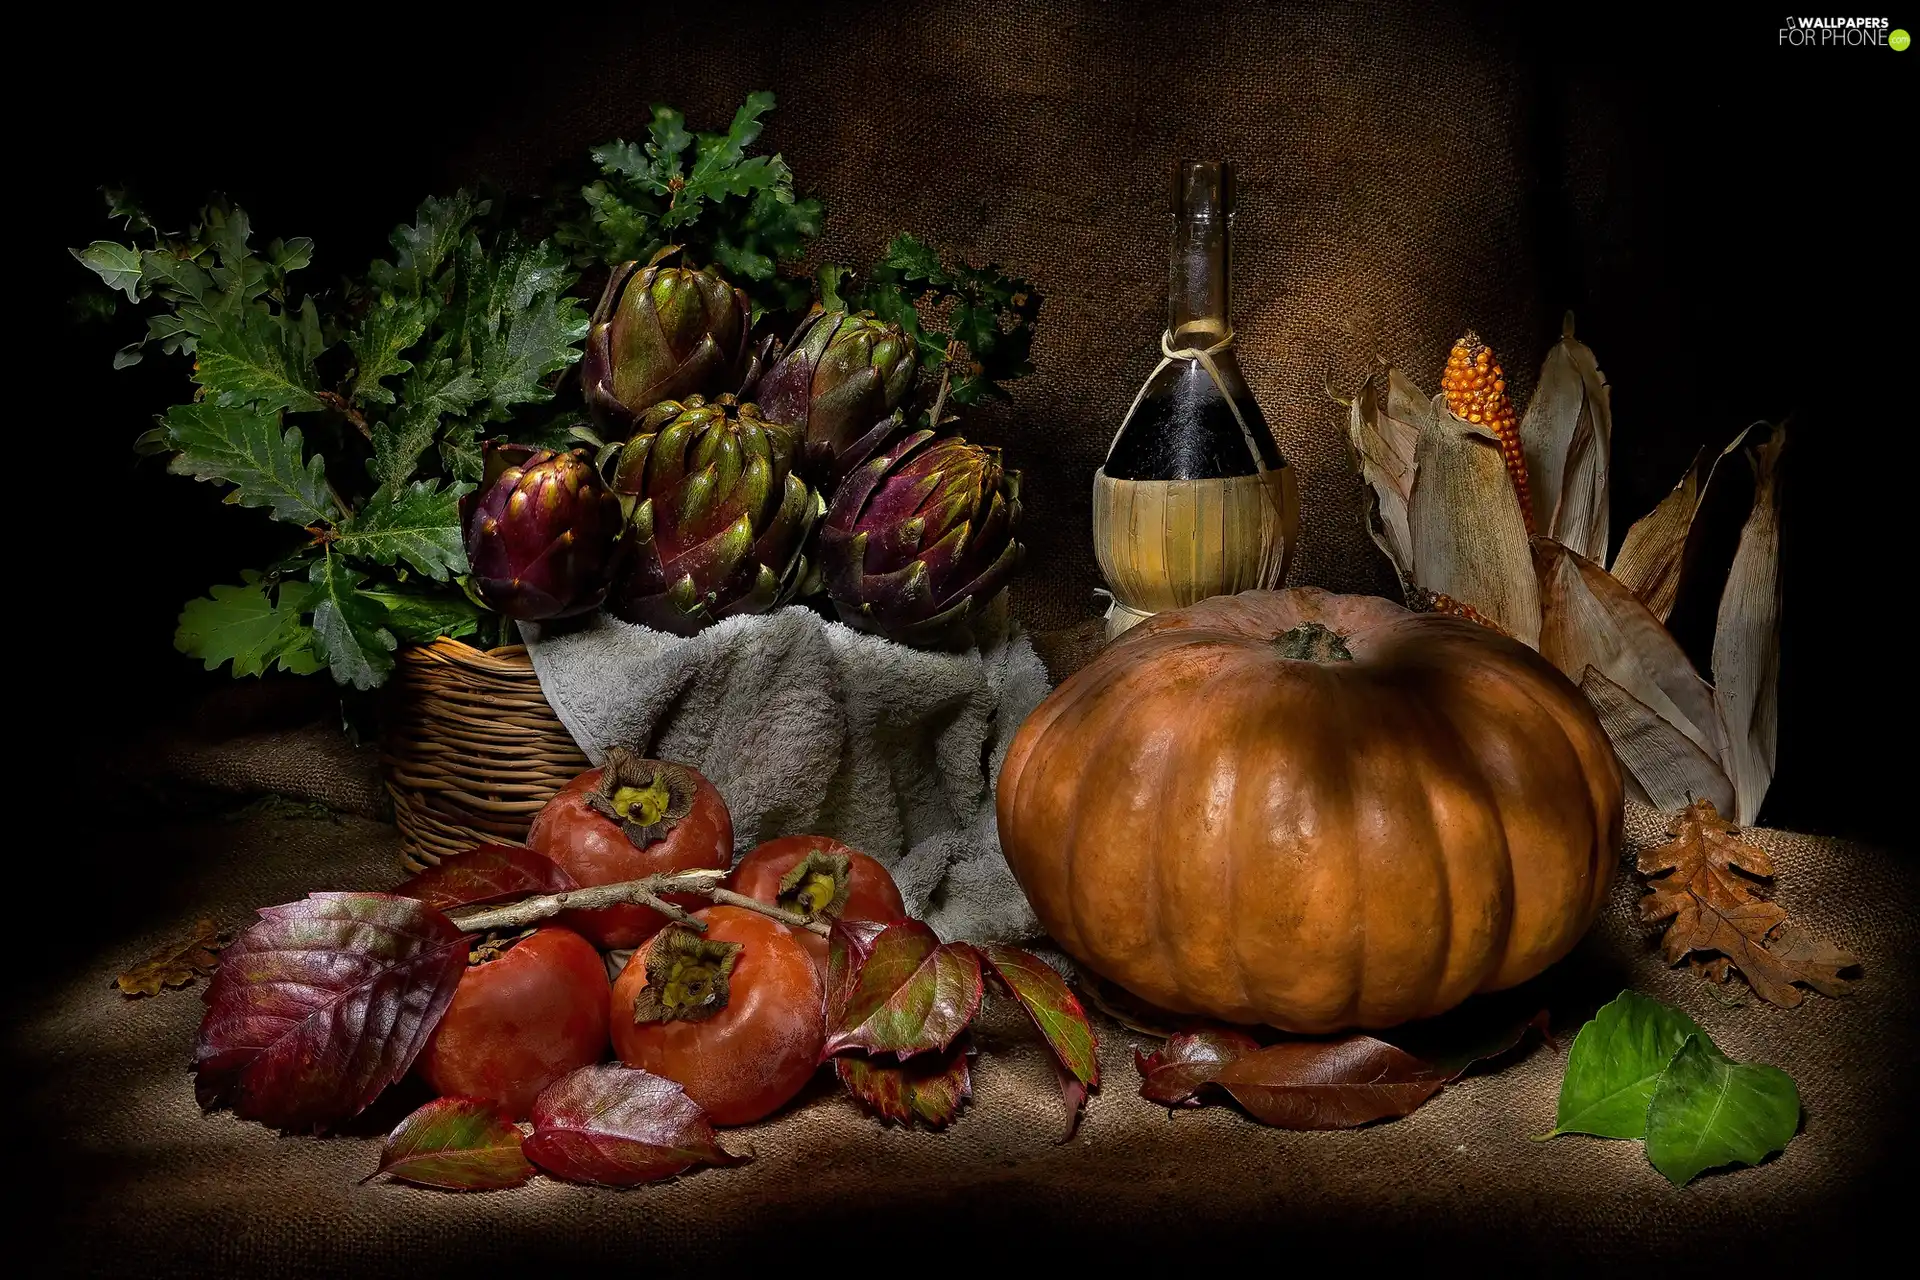 artichokes, vegetables, Leaf, Bottle, pumpkin, Persimmon